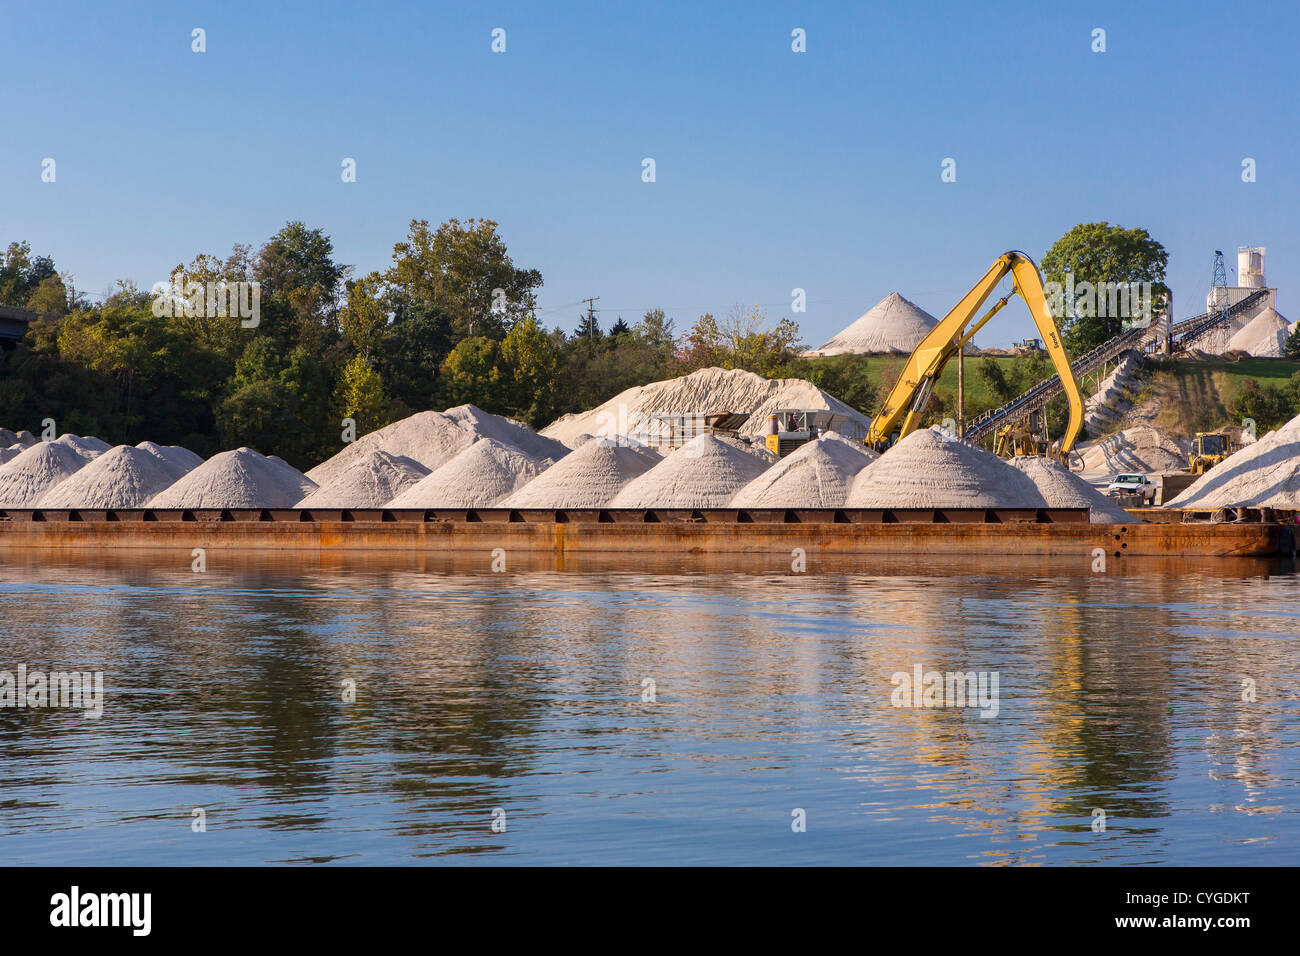 Unsere, VIRGINIA, USA - Schotter und Sand bei Vulcan Materials - Nahost-Division, am Occoquon River. Stockfoto